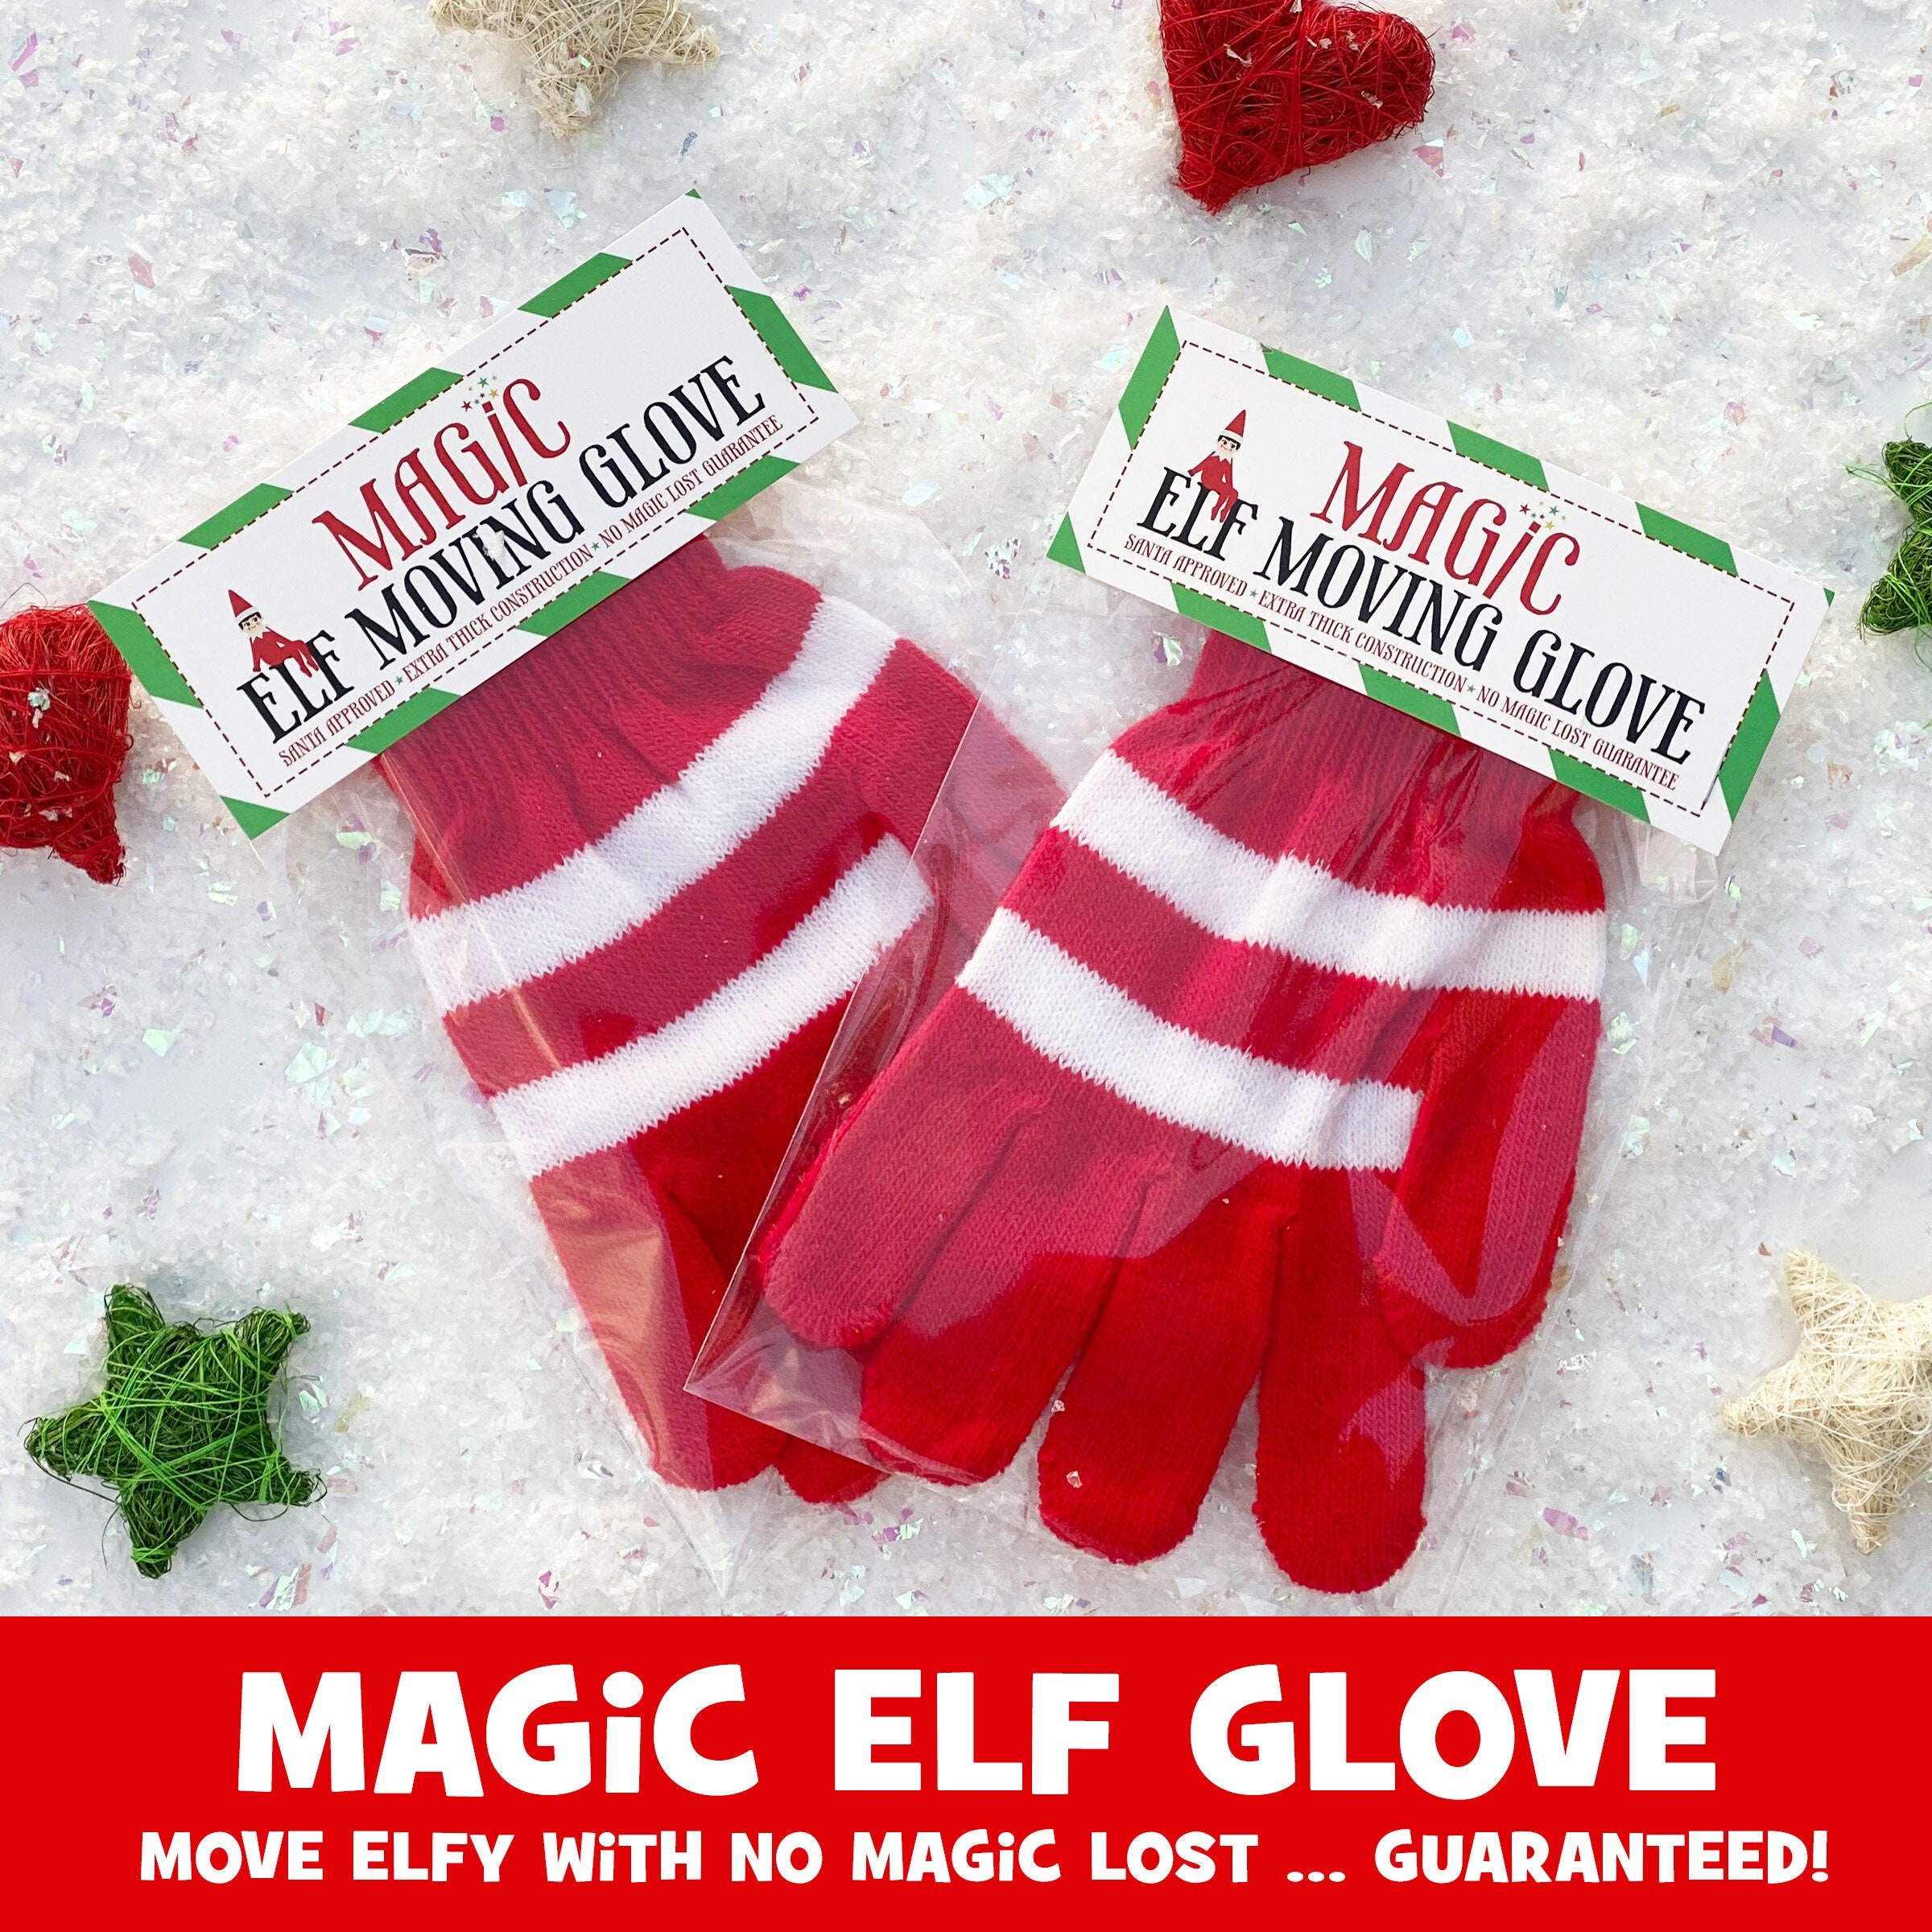 Magic Elf Moving Glove – SleepyMommyShop